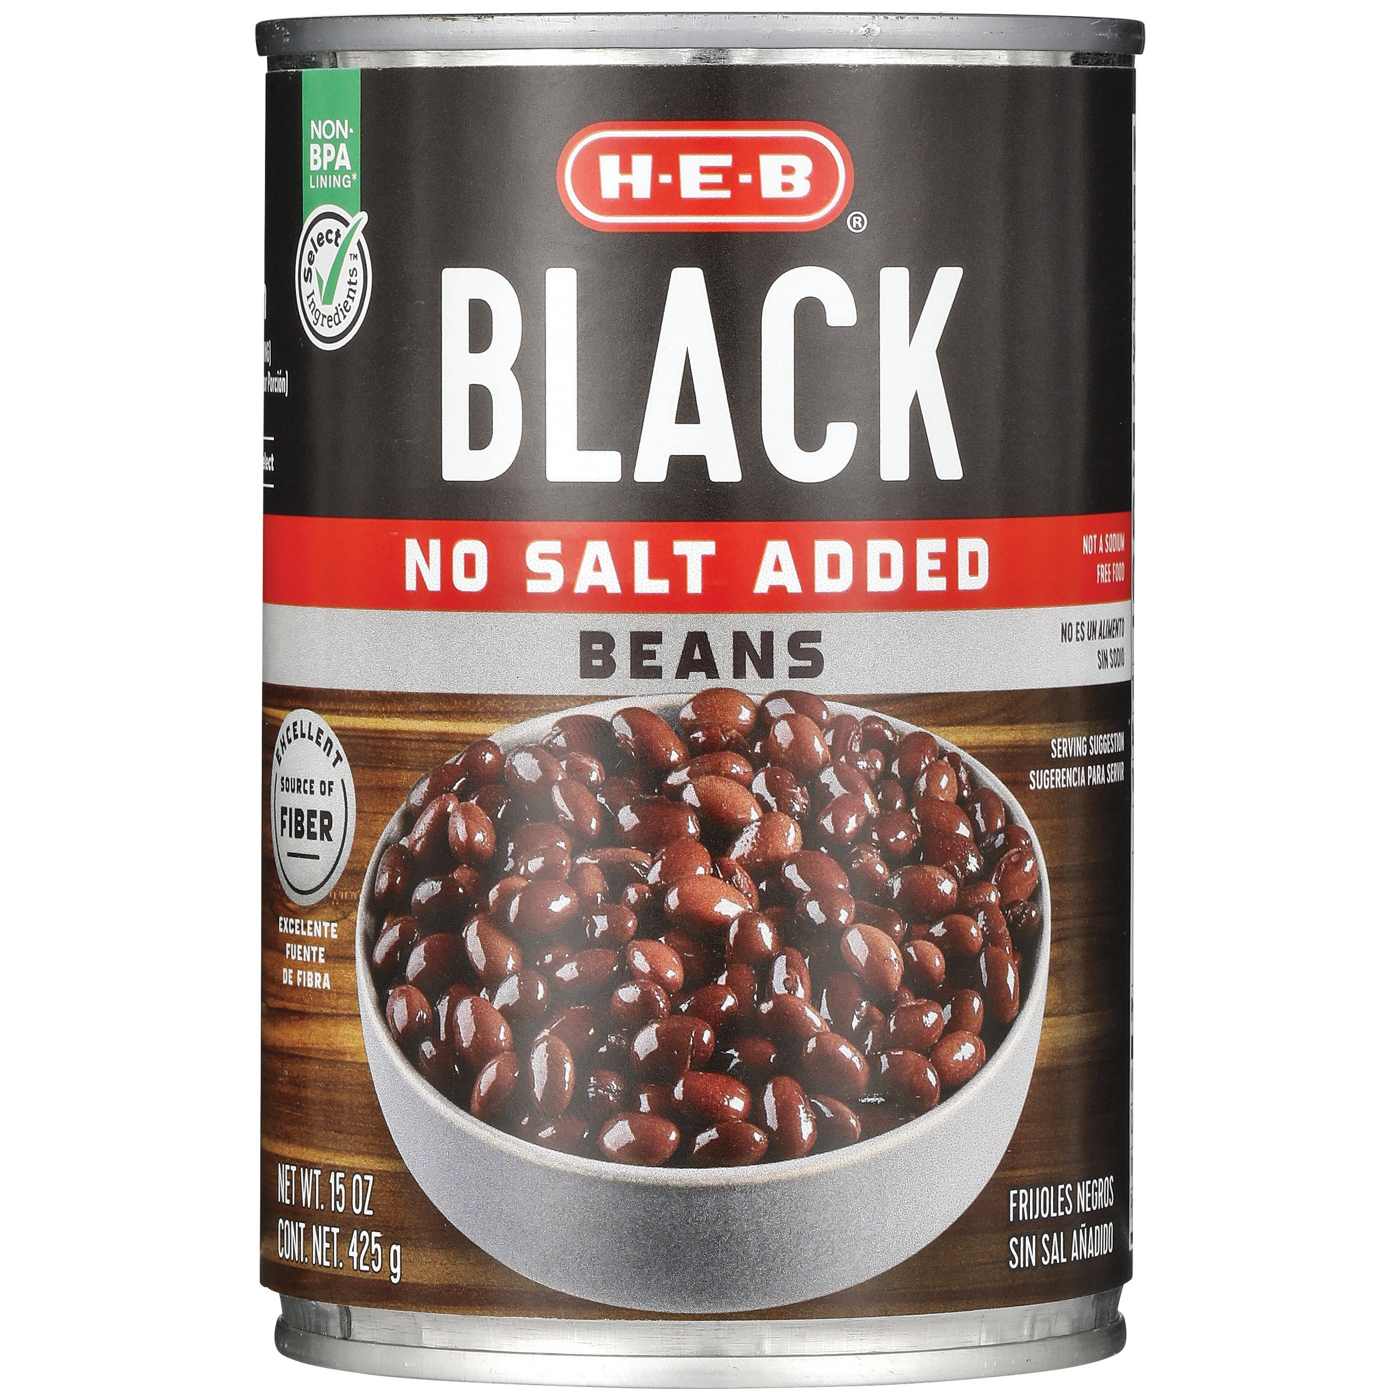 H-E-B No Salt Added Black Beans; image 1 of 2